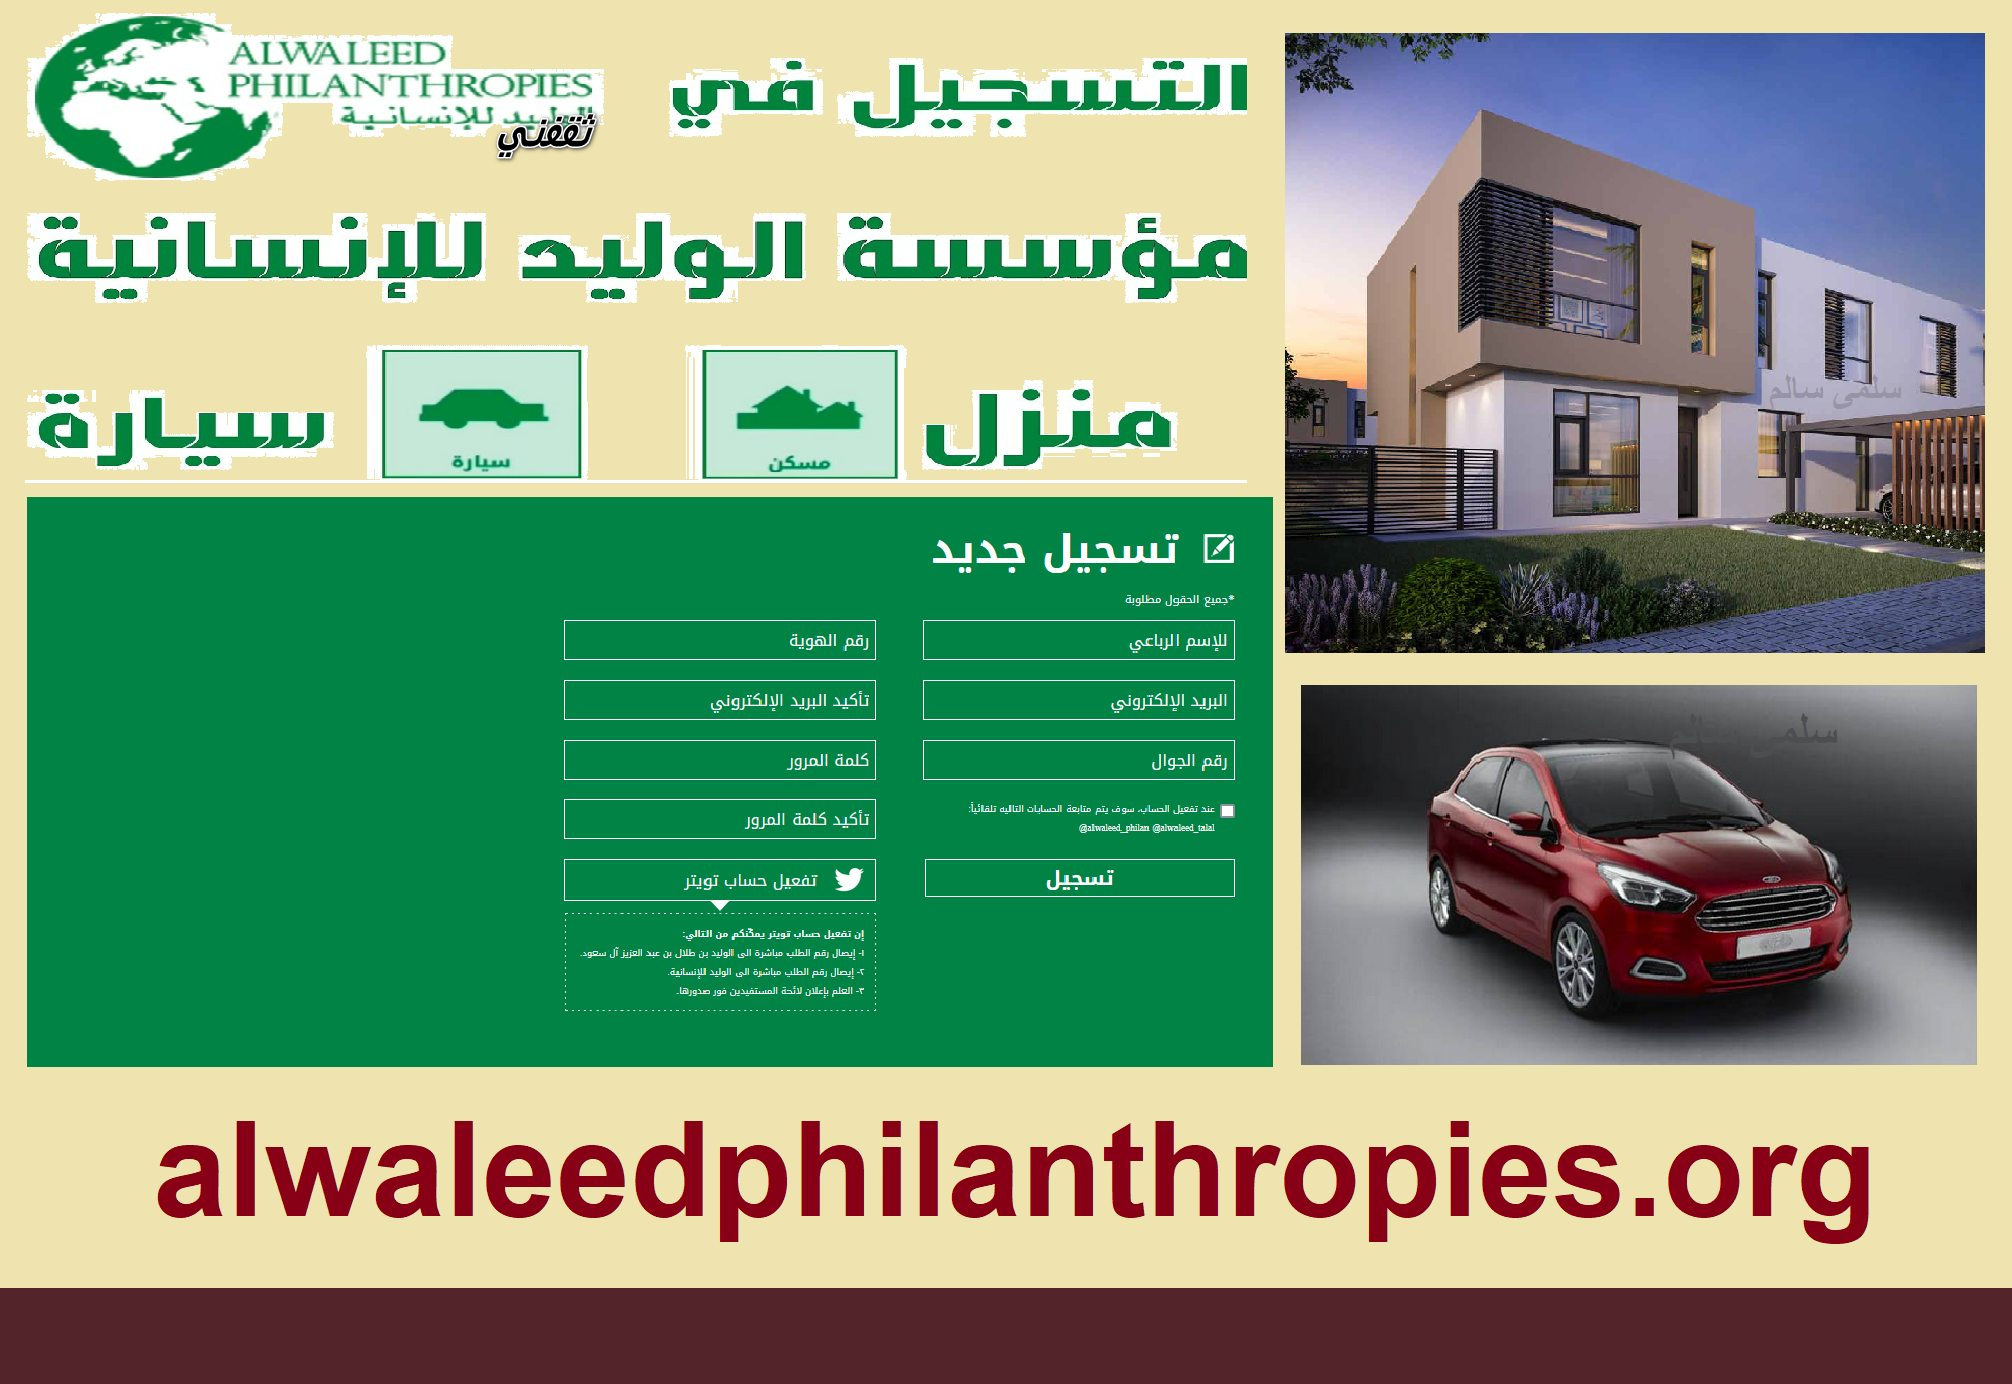 alwaleedphilanthropies مؤسسة الوليد بن طلال الخيرية رابط تقديم وتسجيل طلب مسكن سيارة كمعونة ومساعدة - مدونة التقنية العربية